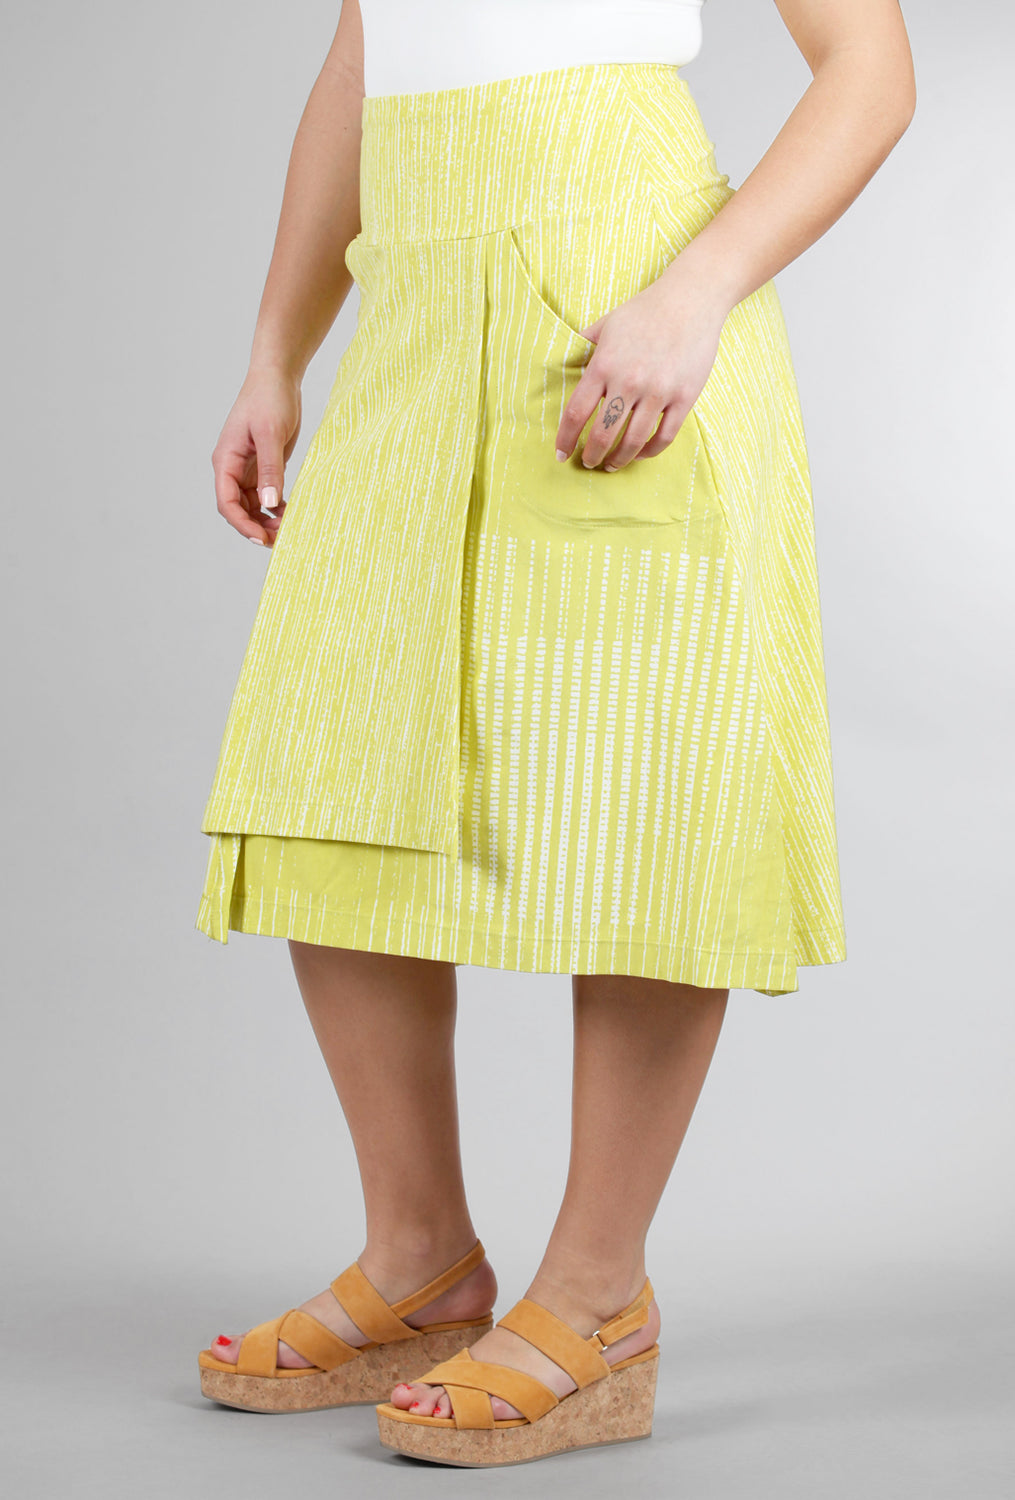 Hollis Skirt, Lemon